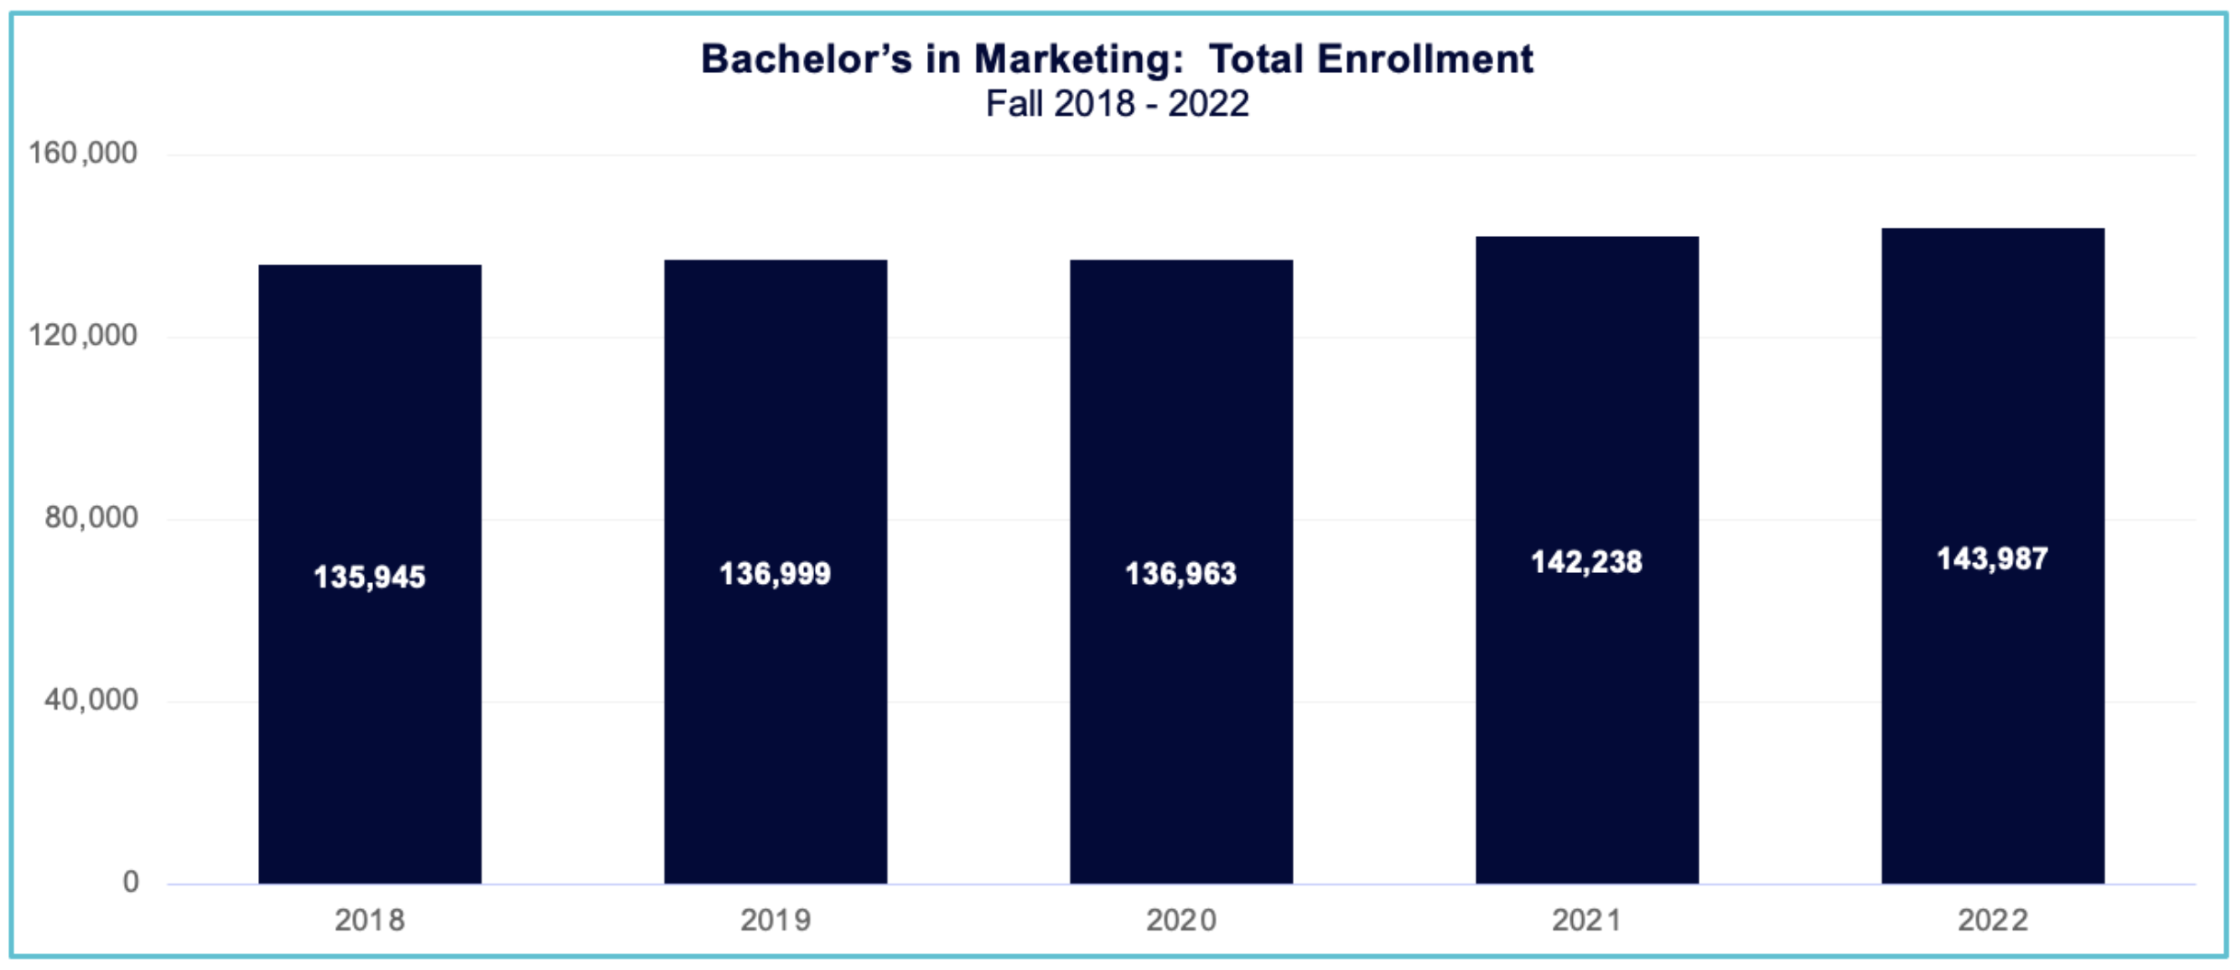 Bachelor's in marketing: total enrollment (fall 2018 - 2022)